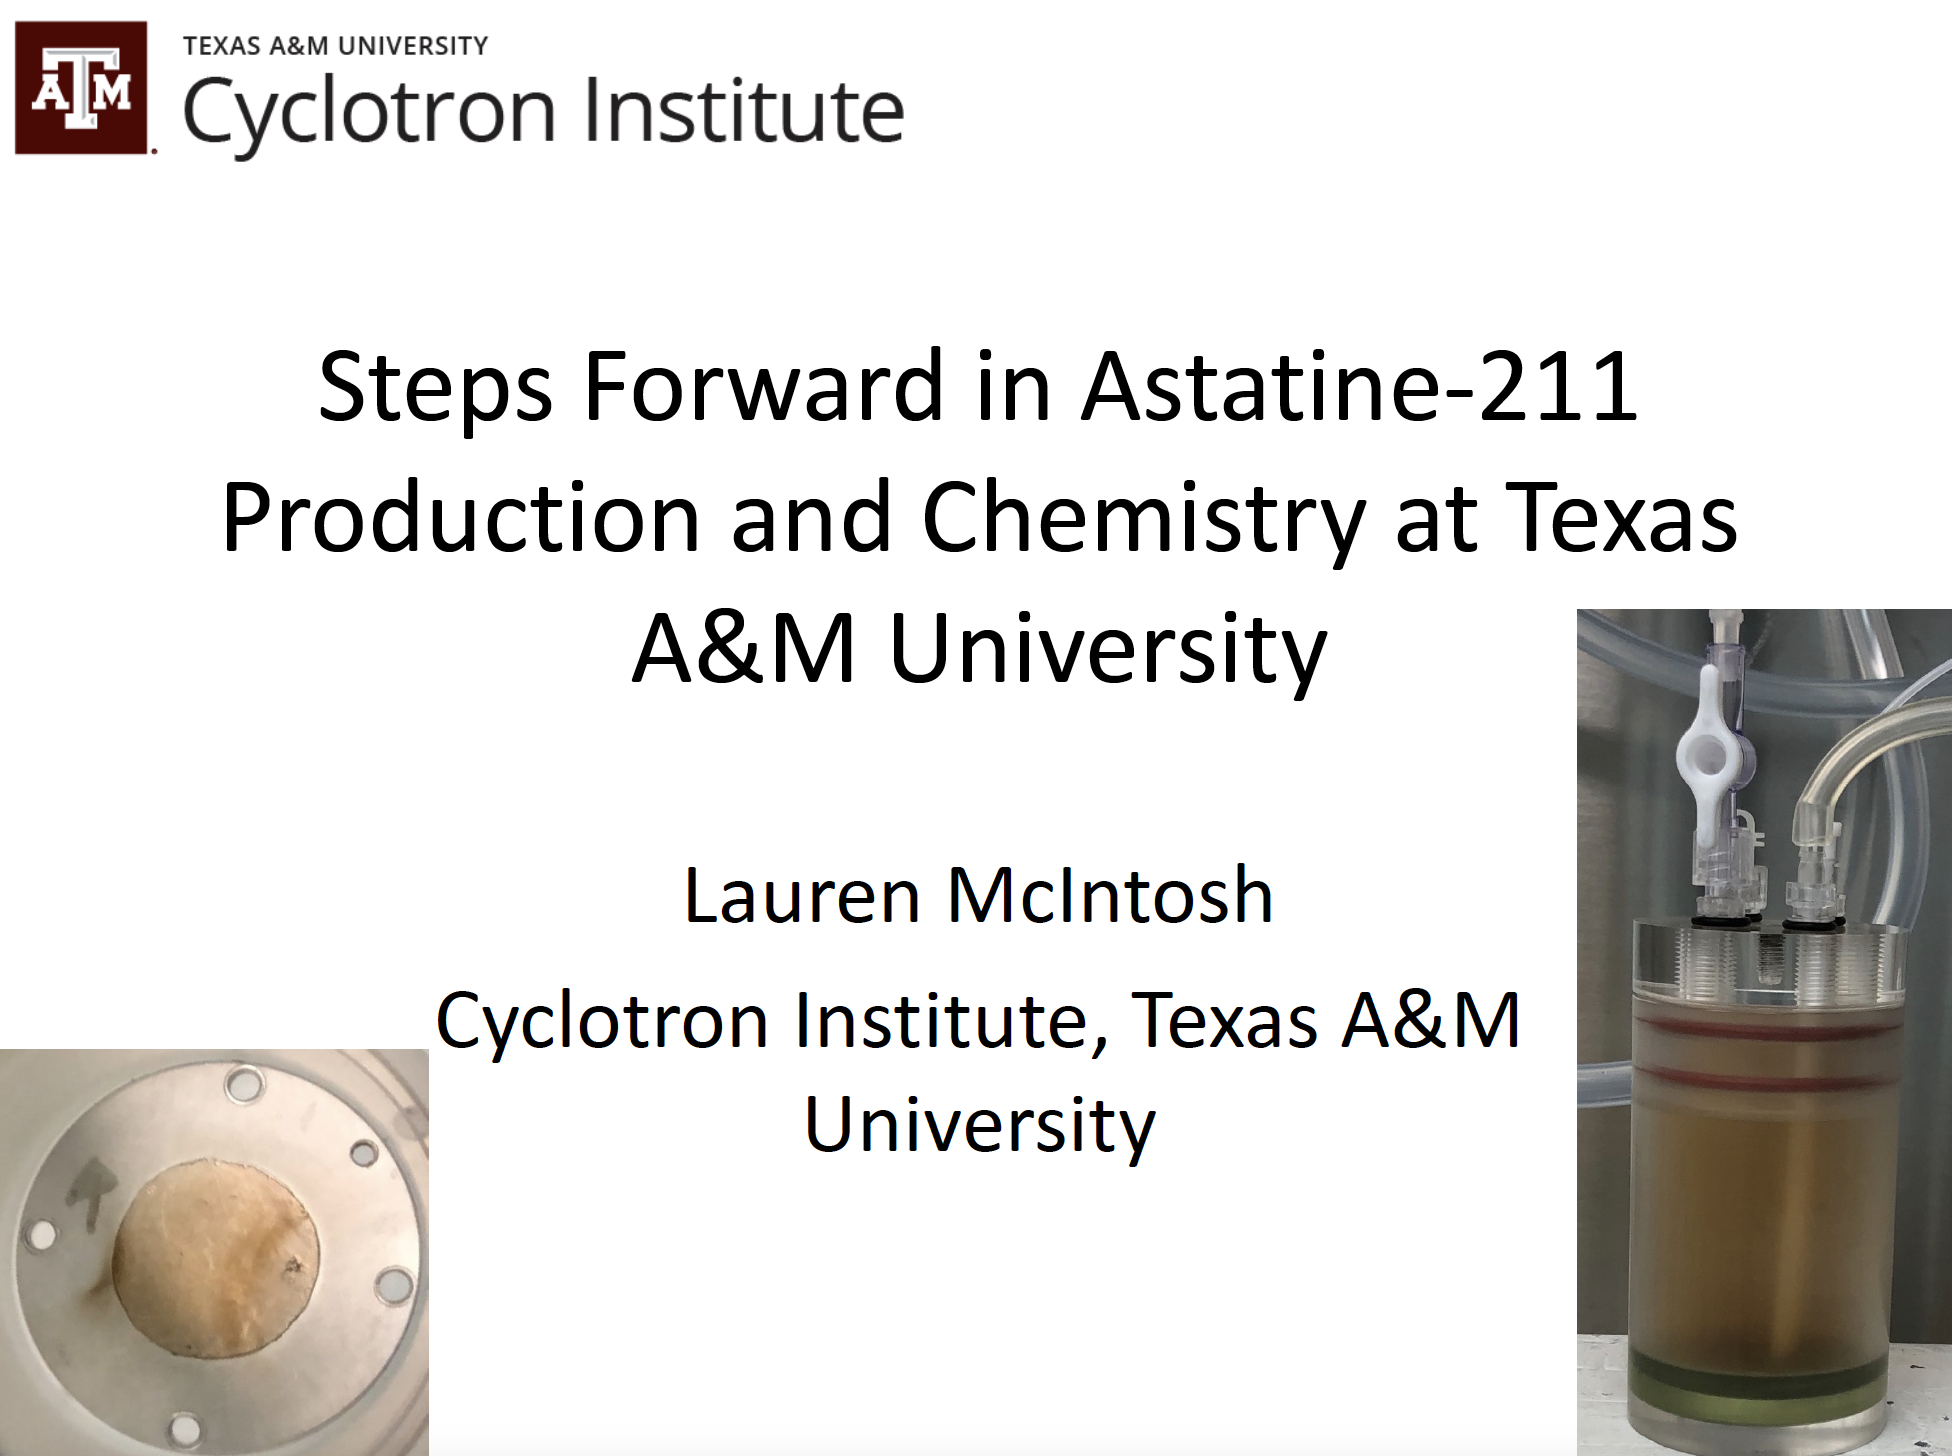 Cyclotron Institute, Texas A&M University